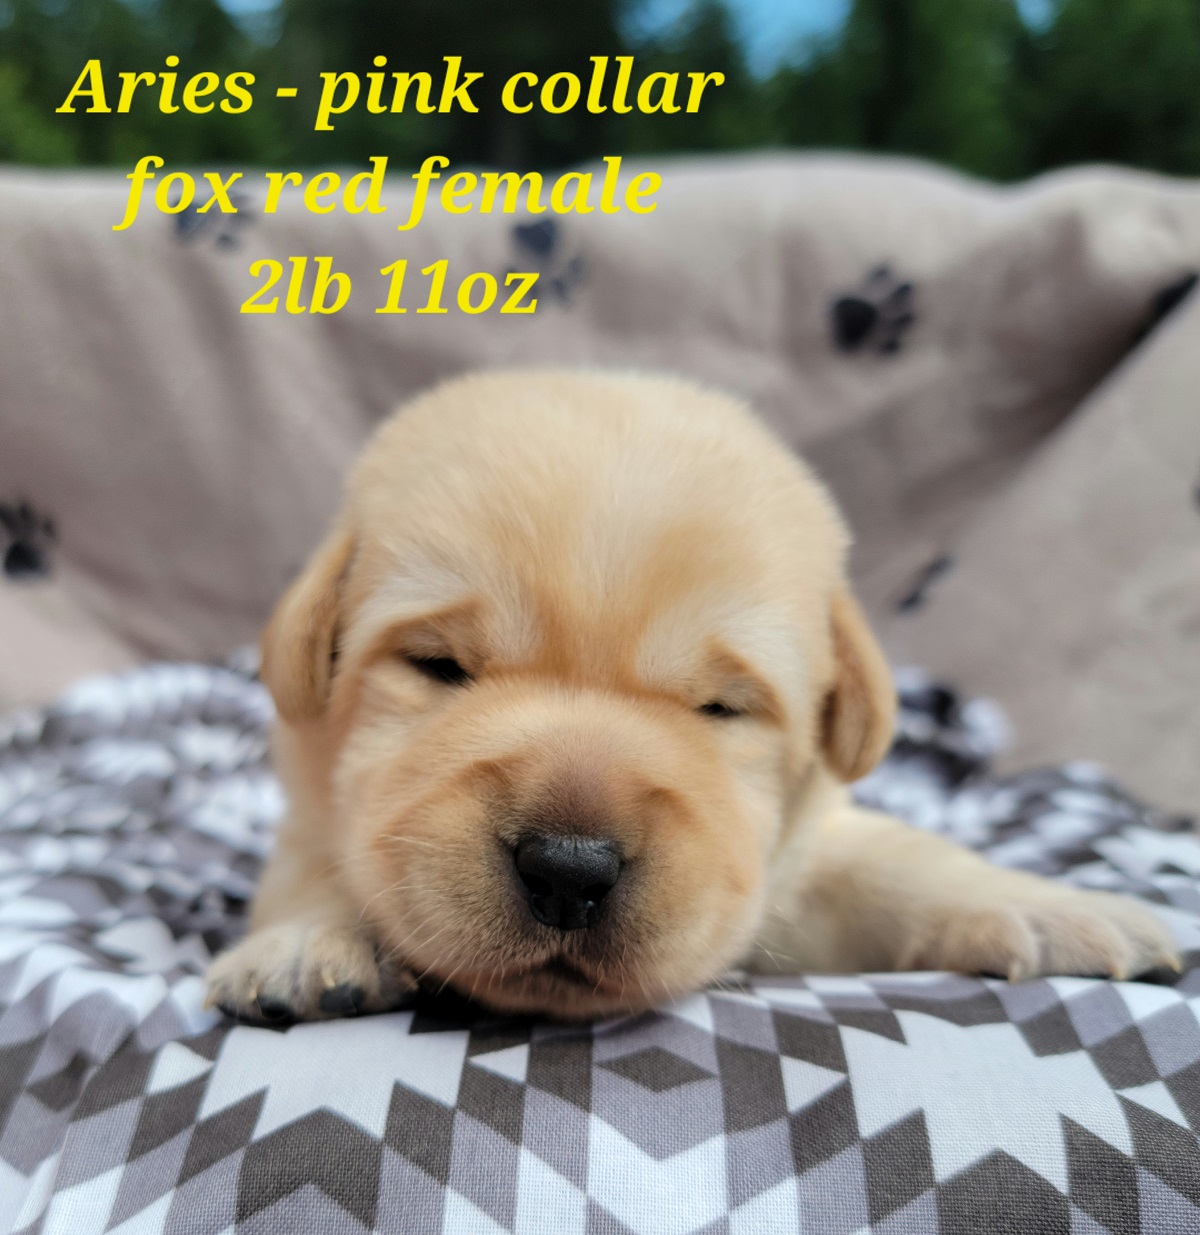 Culper #47 - pink collar.jpg